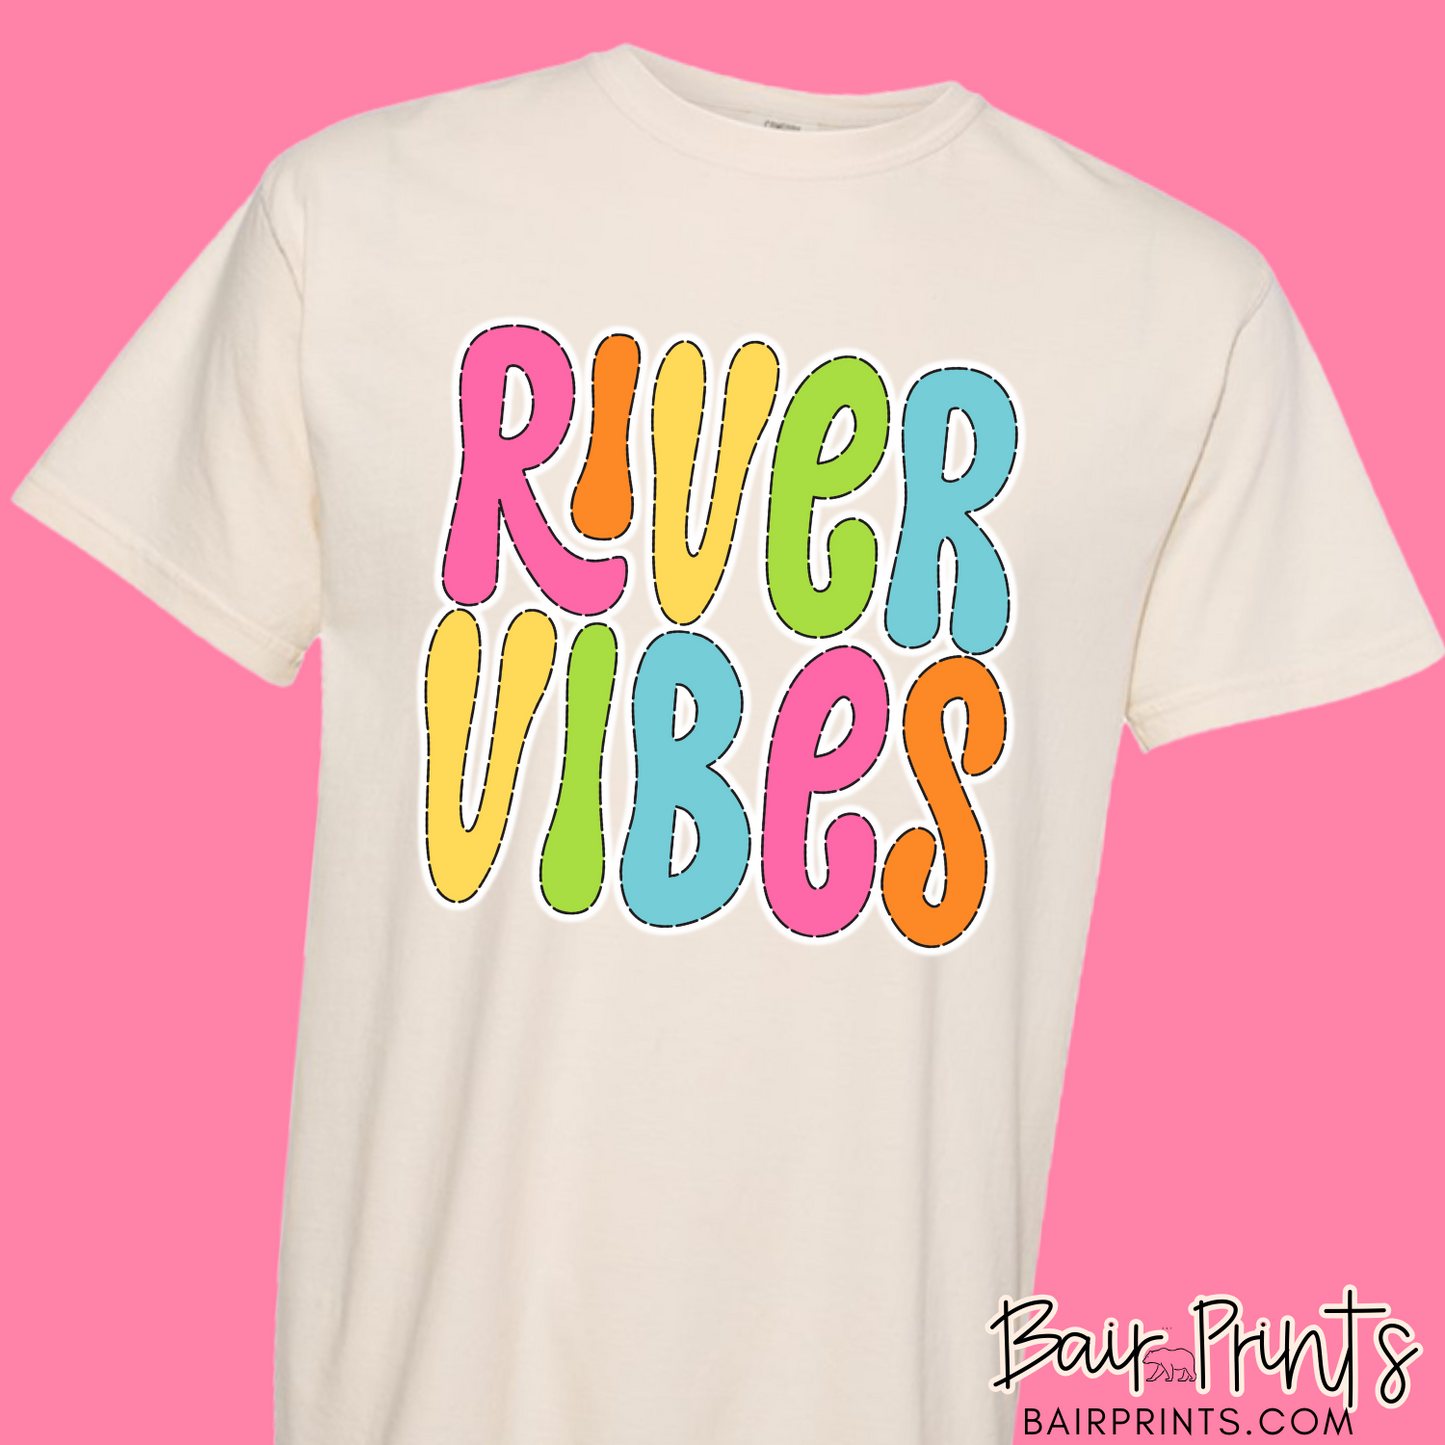 Neon River Vibes T-Shirt